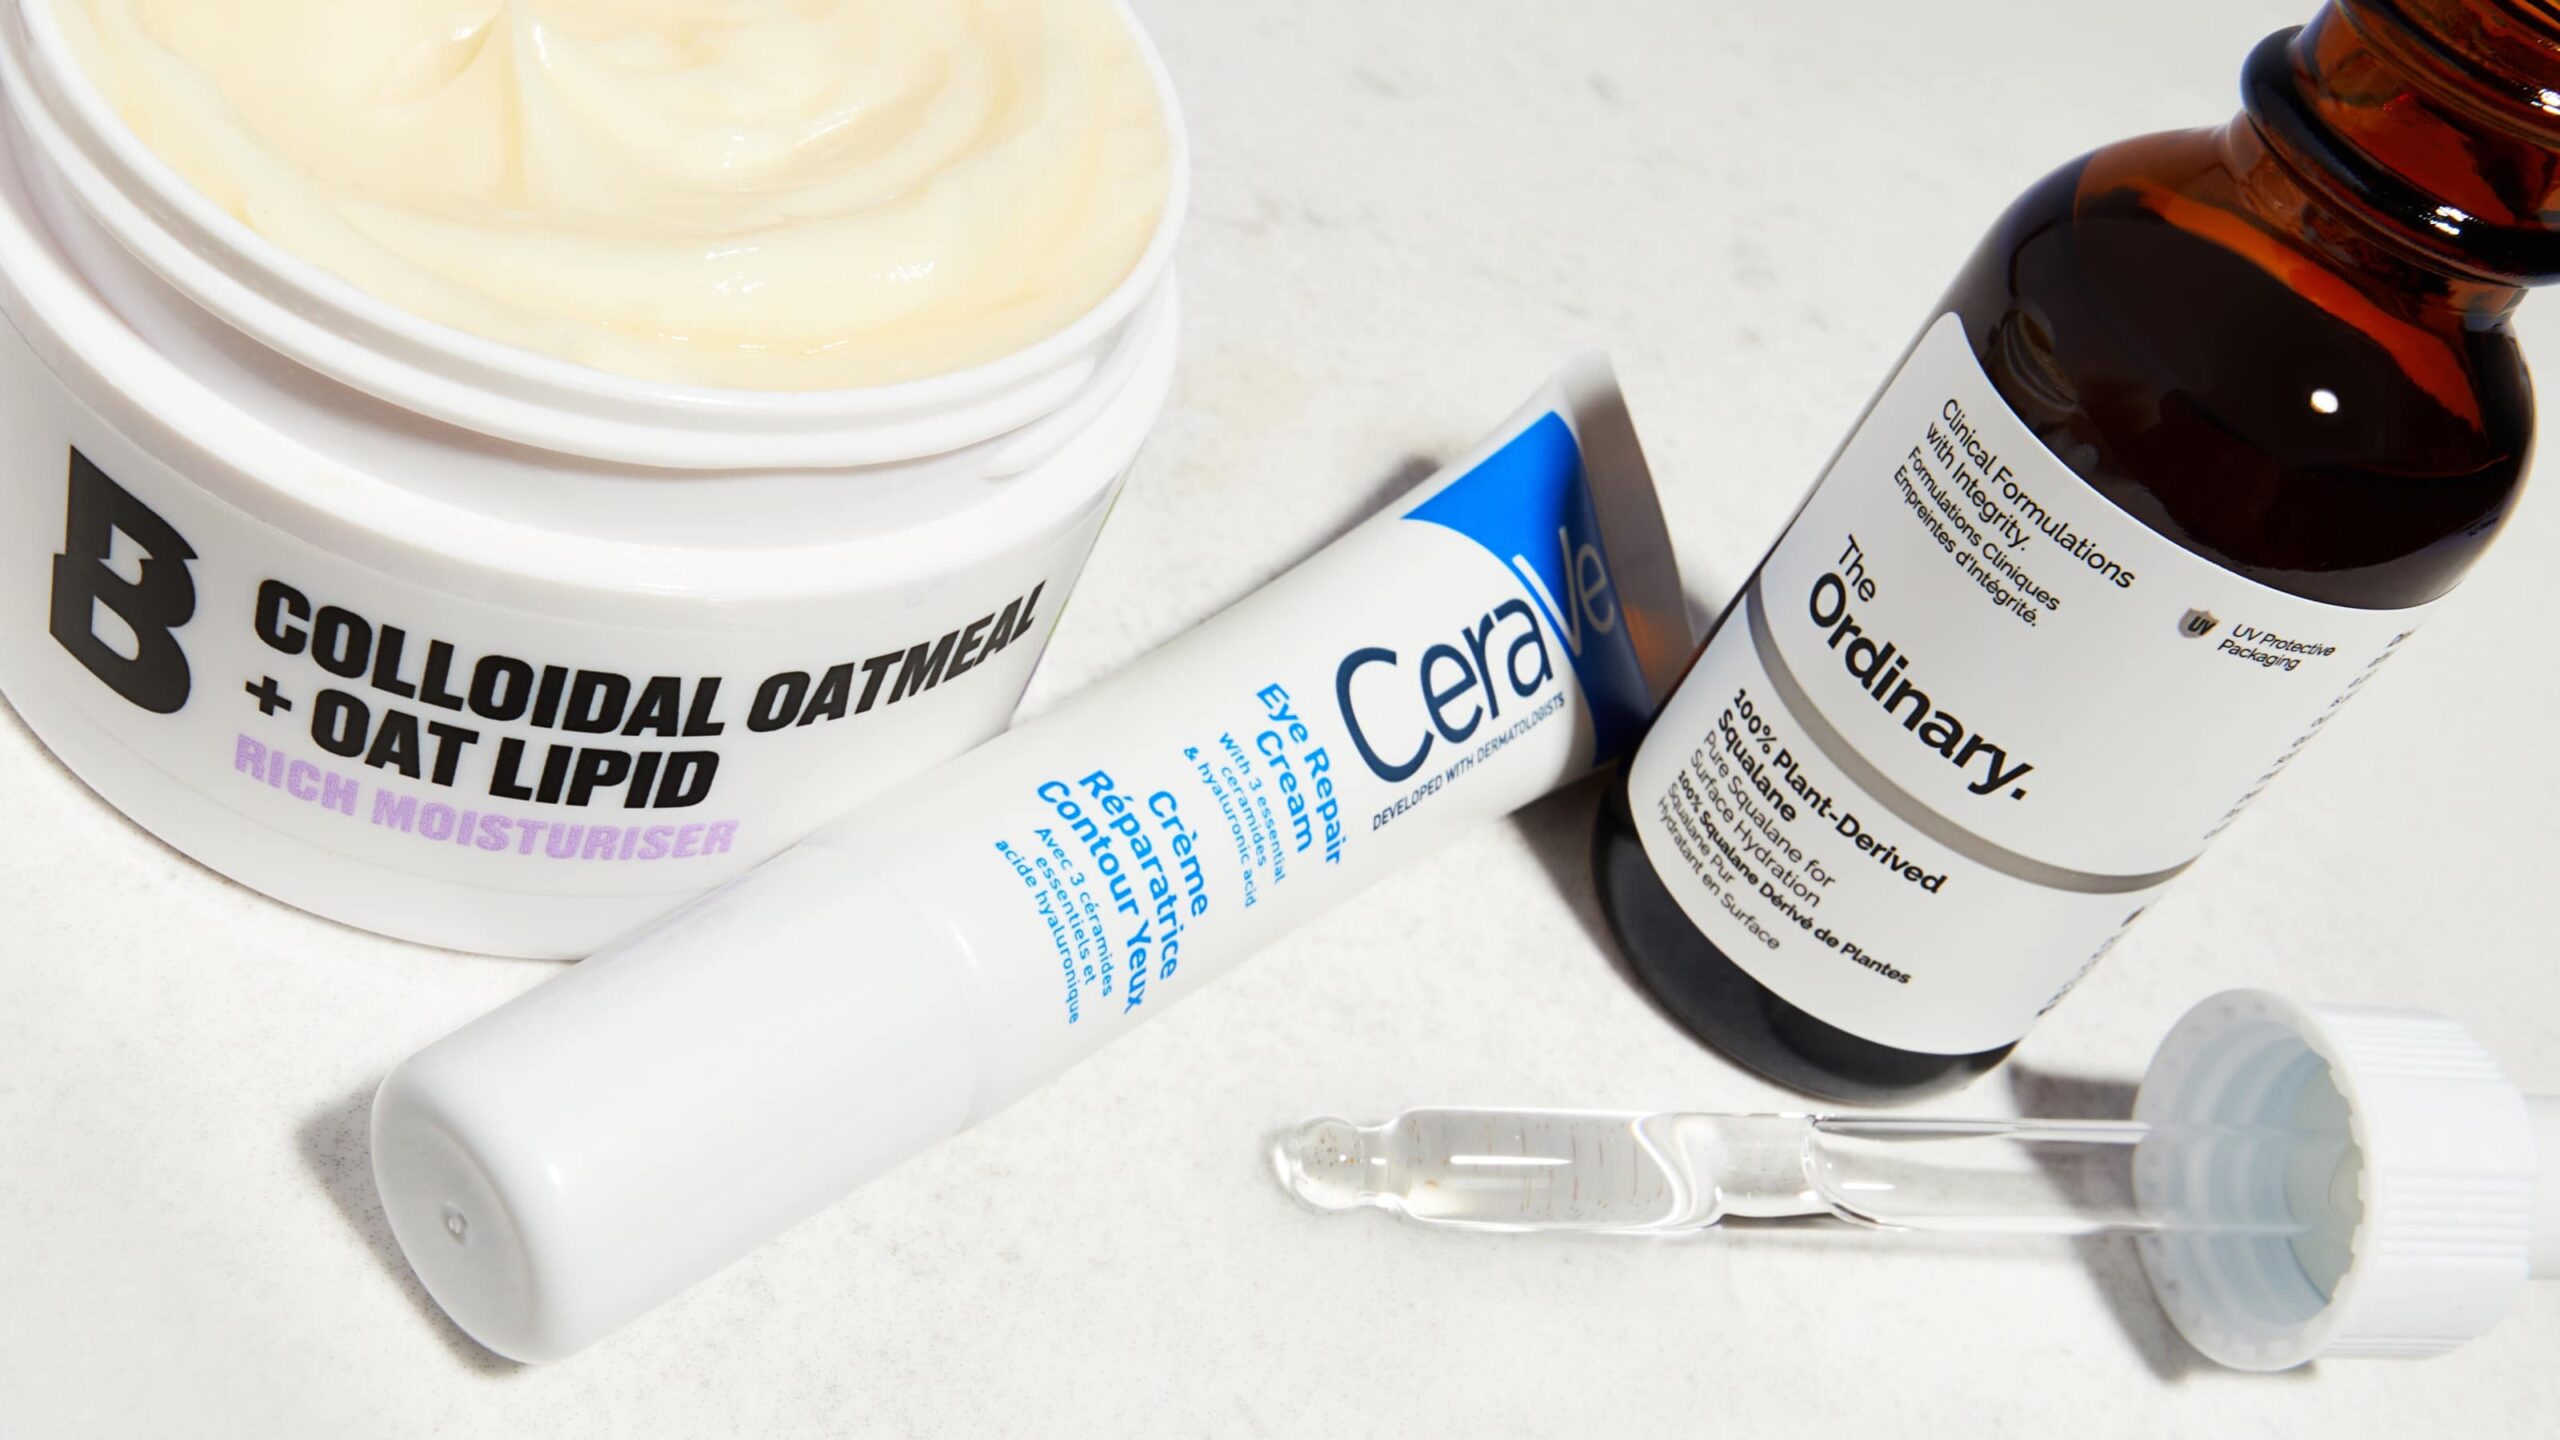 Best Winter Skincare Essentials According to Dermatologists